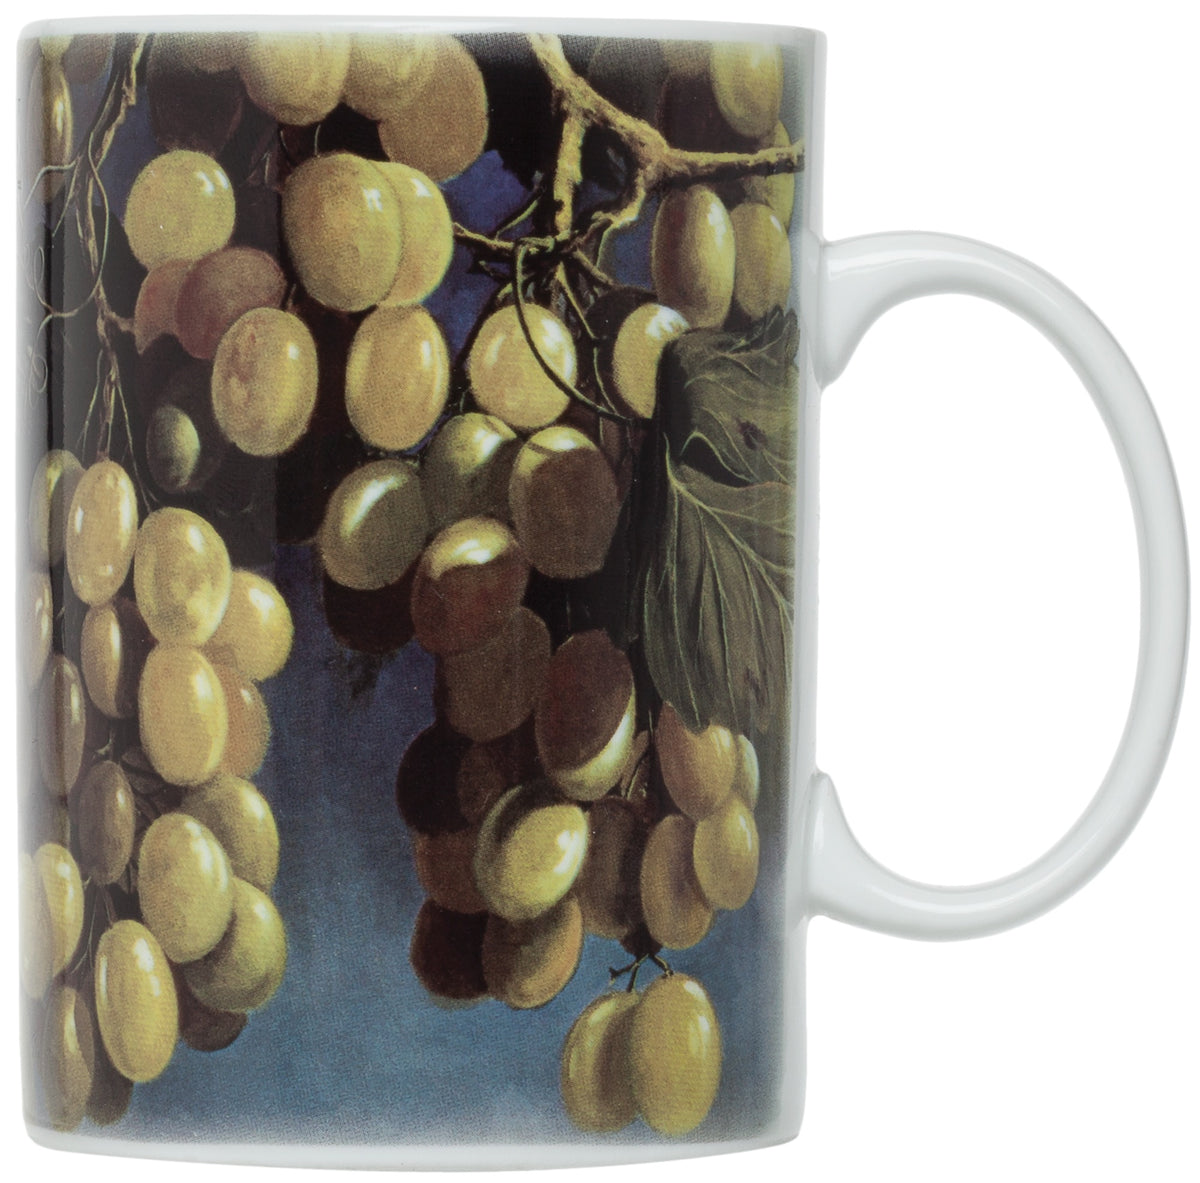 Harold Import NT786 Pergola Grapes Mugs, 16 Oz